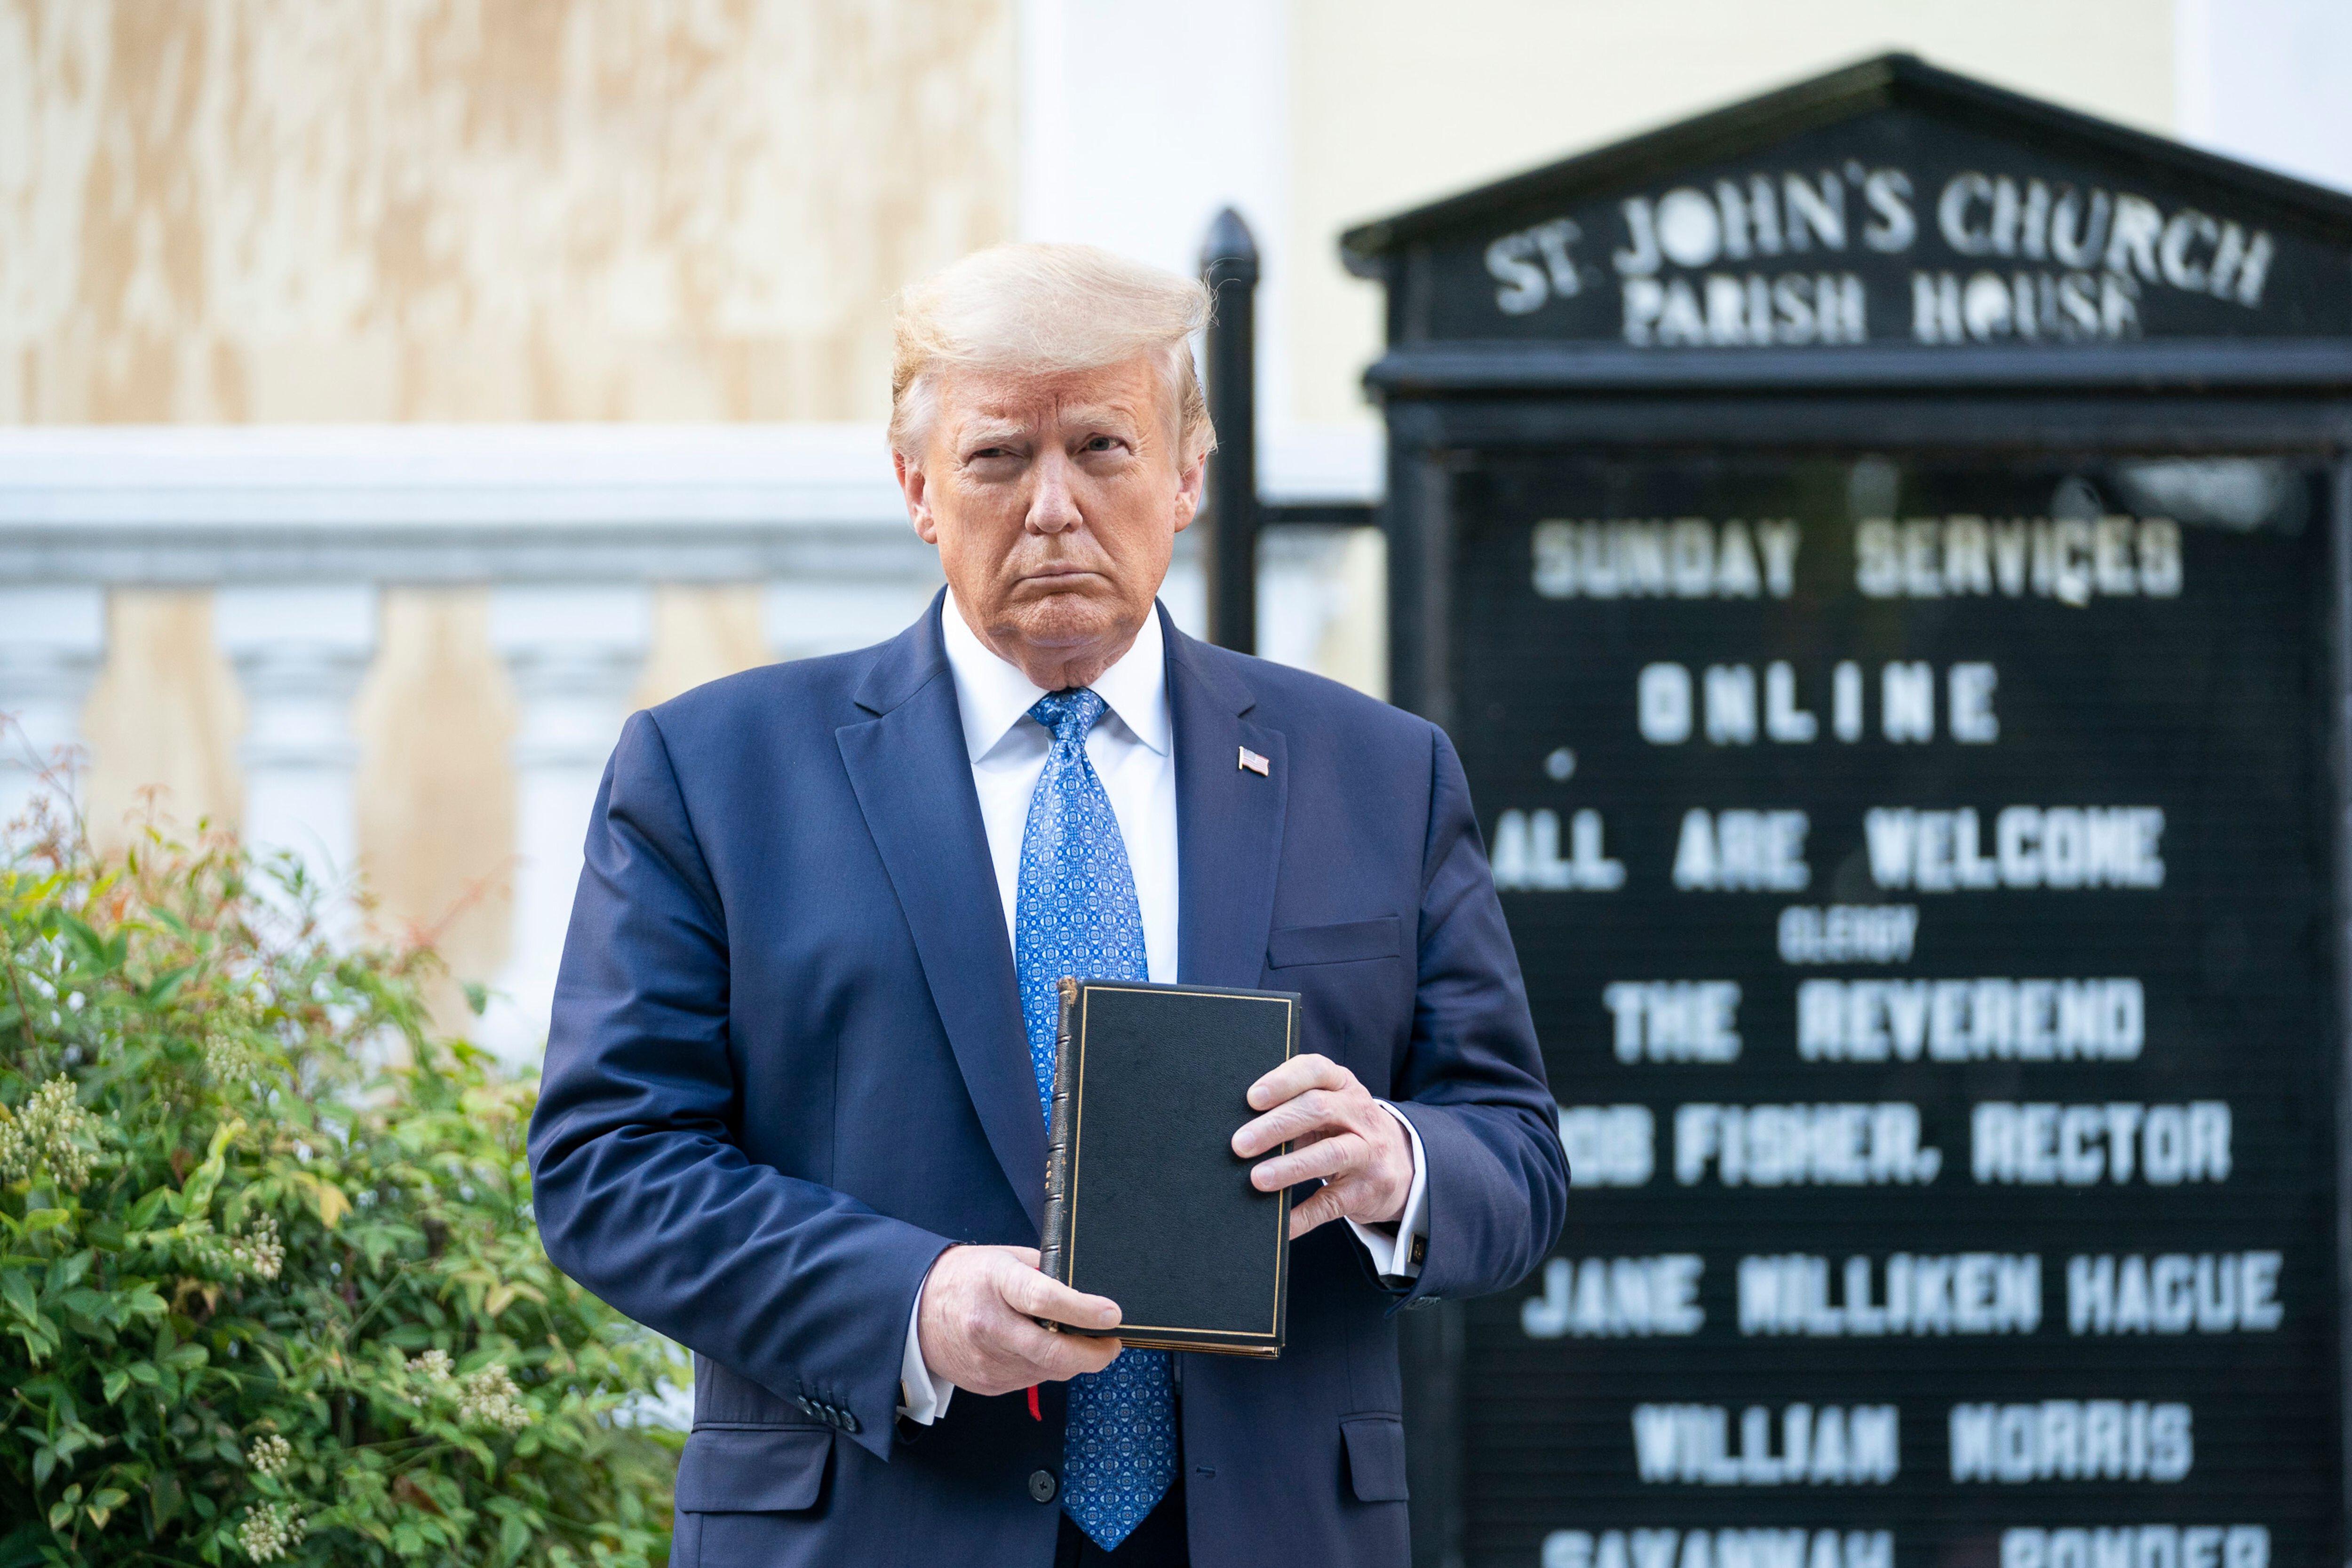 Trump promotes Holy Week bible